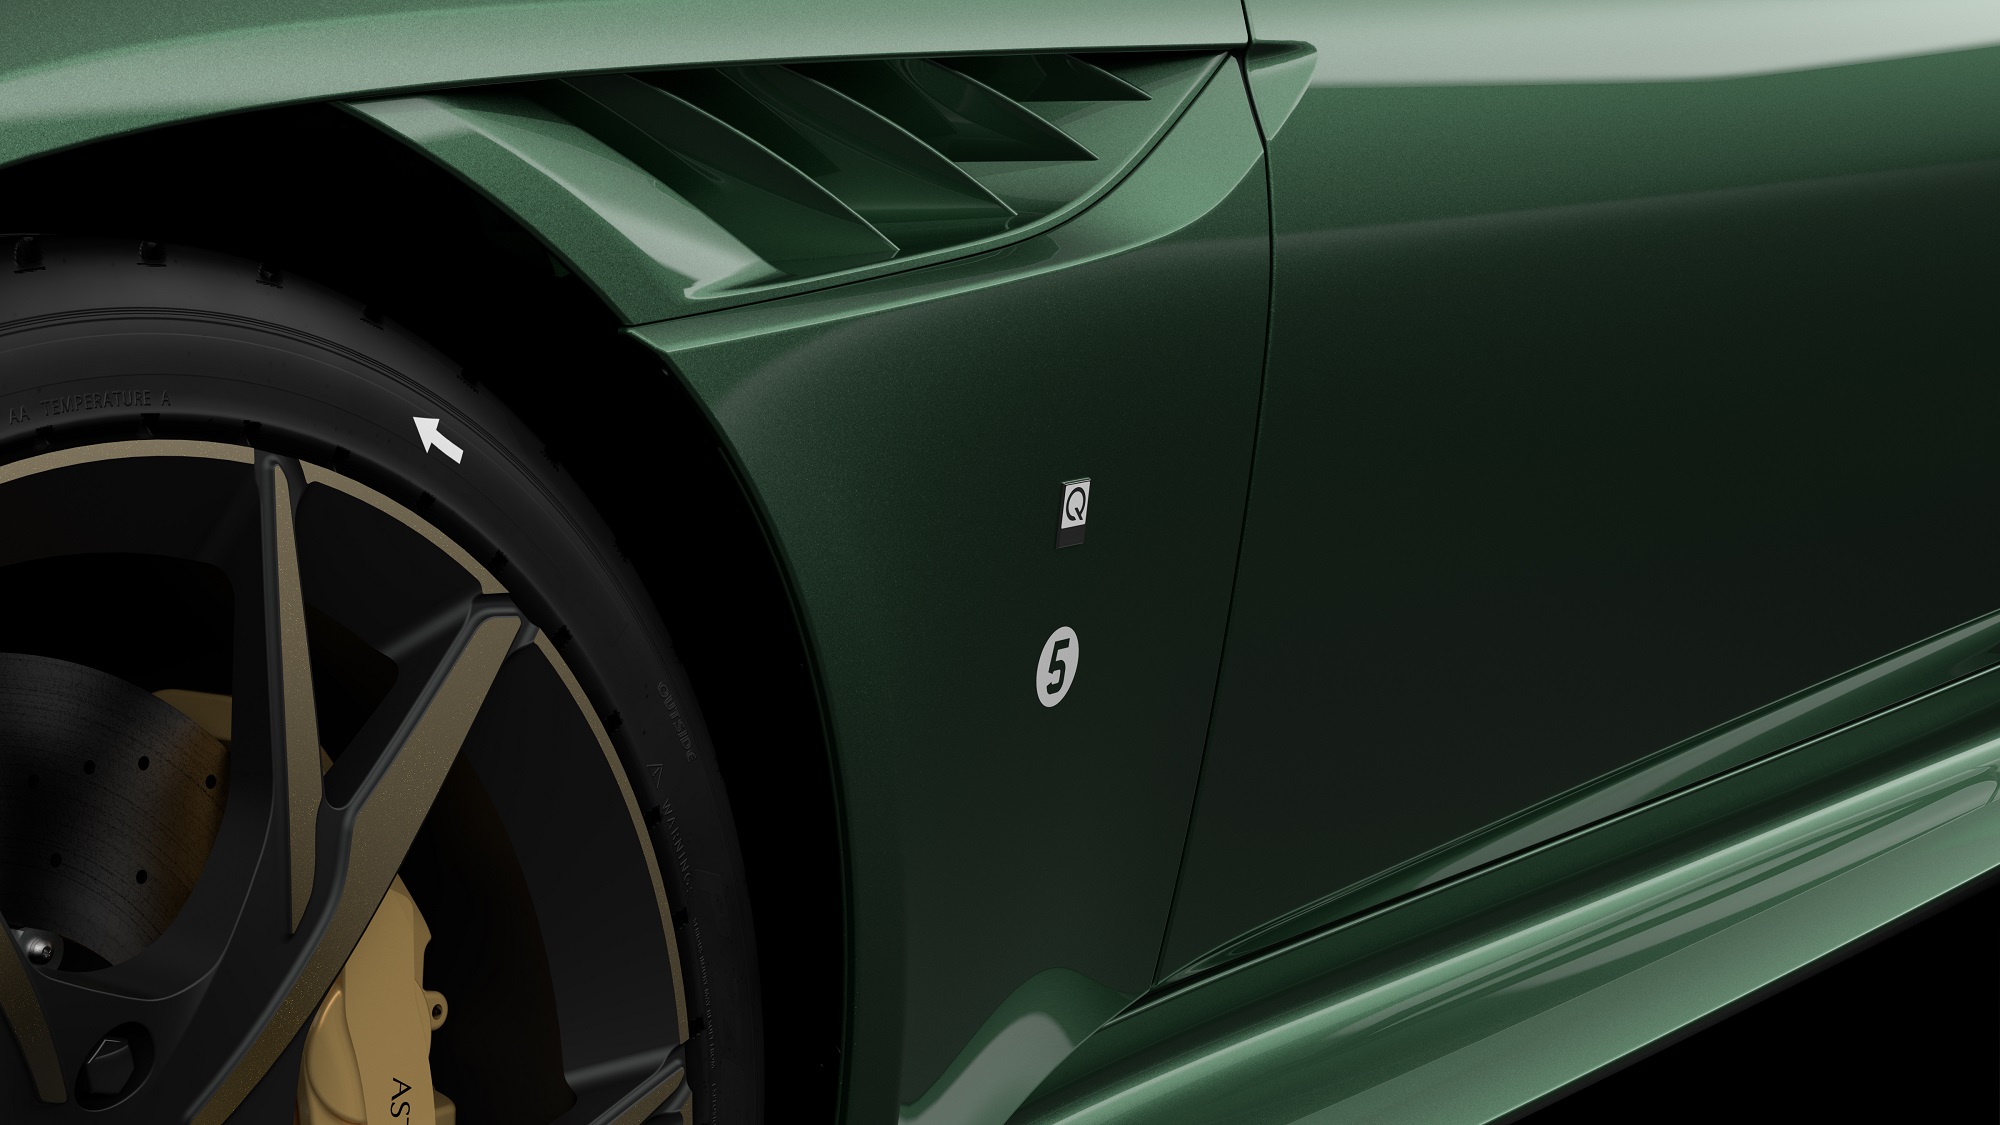 Q by Aston Martin DBS 59 DBS Superleggera 6SpeedOnline.com